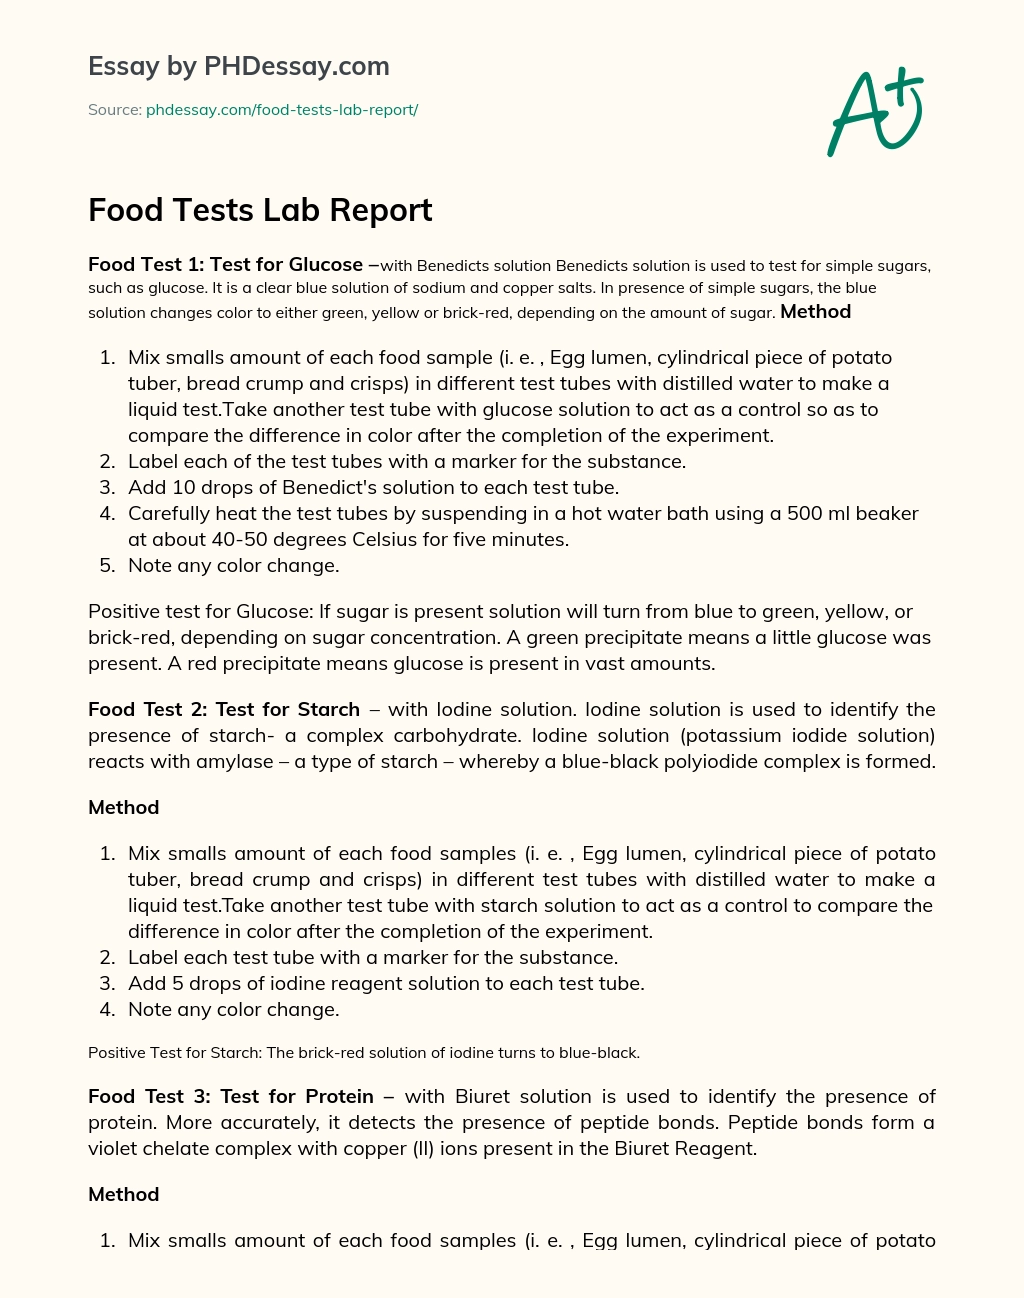 Food Tests Lab Report essay